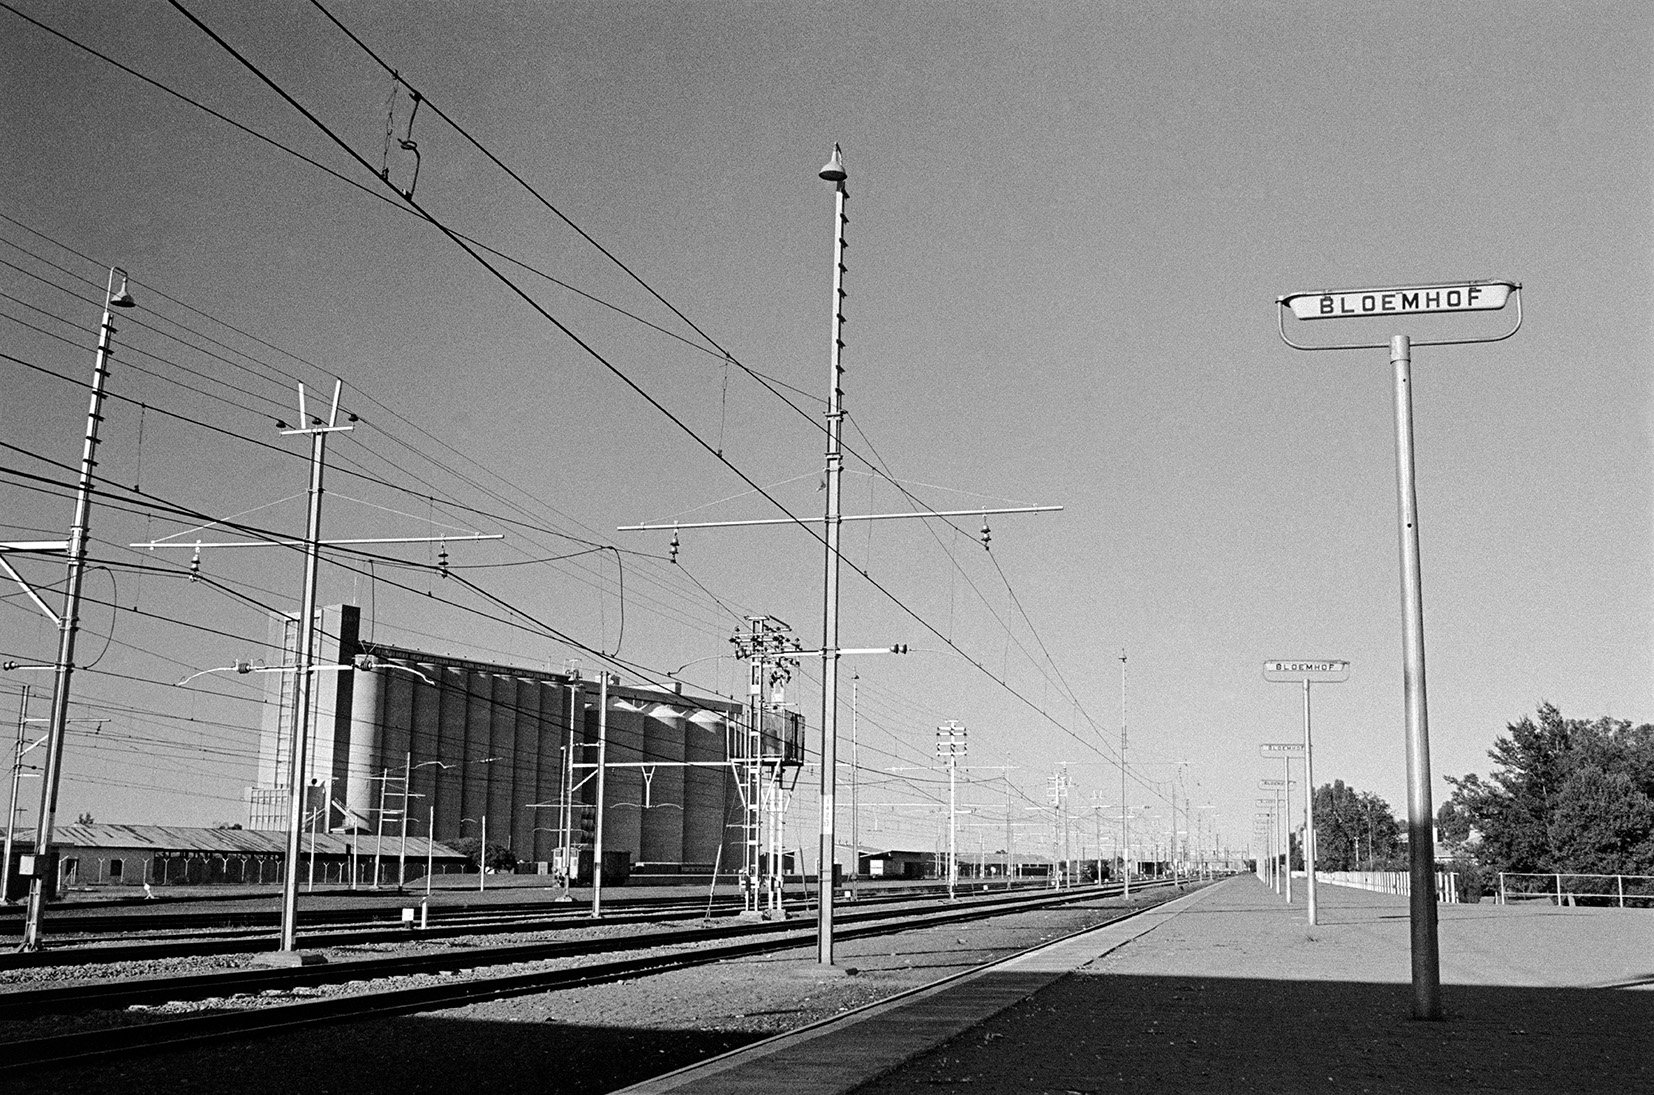  Bloemhof Station, Bloemhof/ 1988 